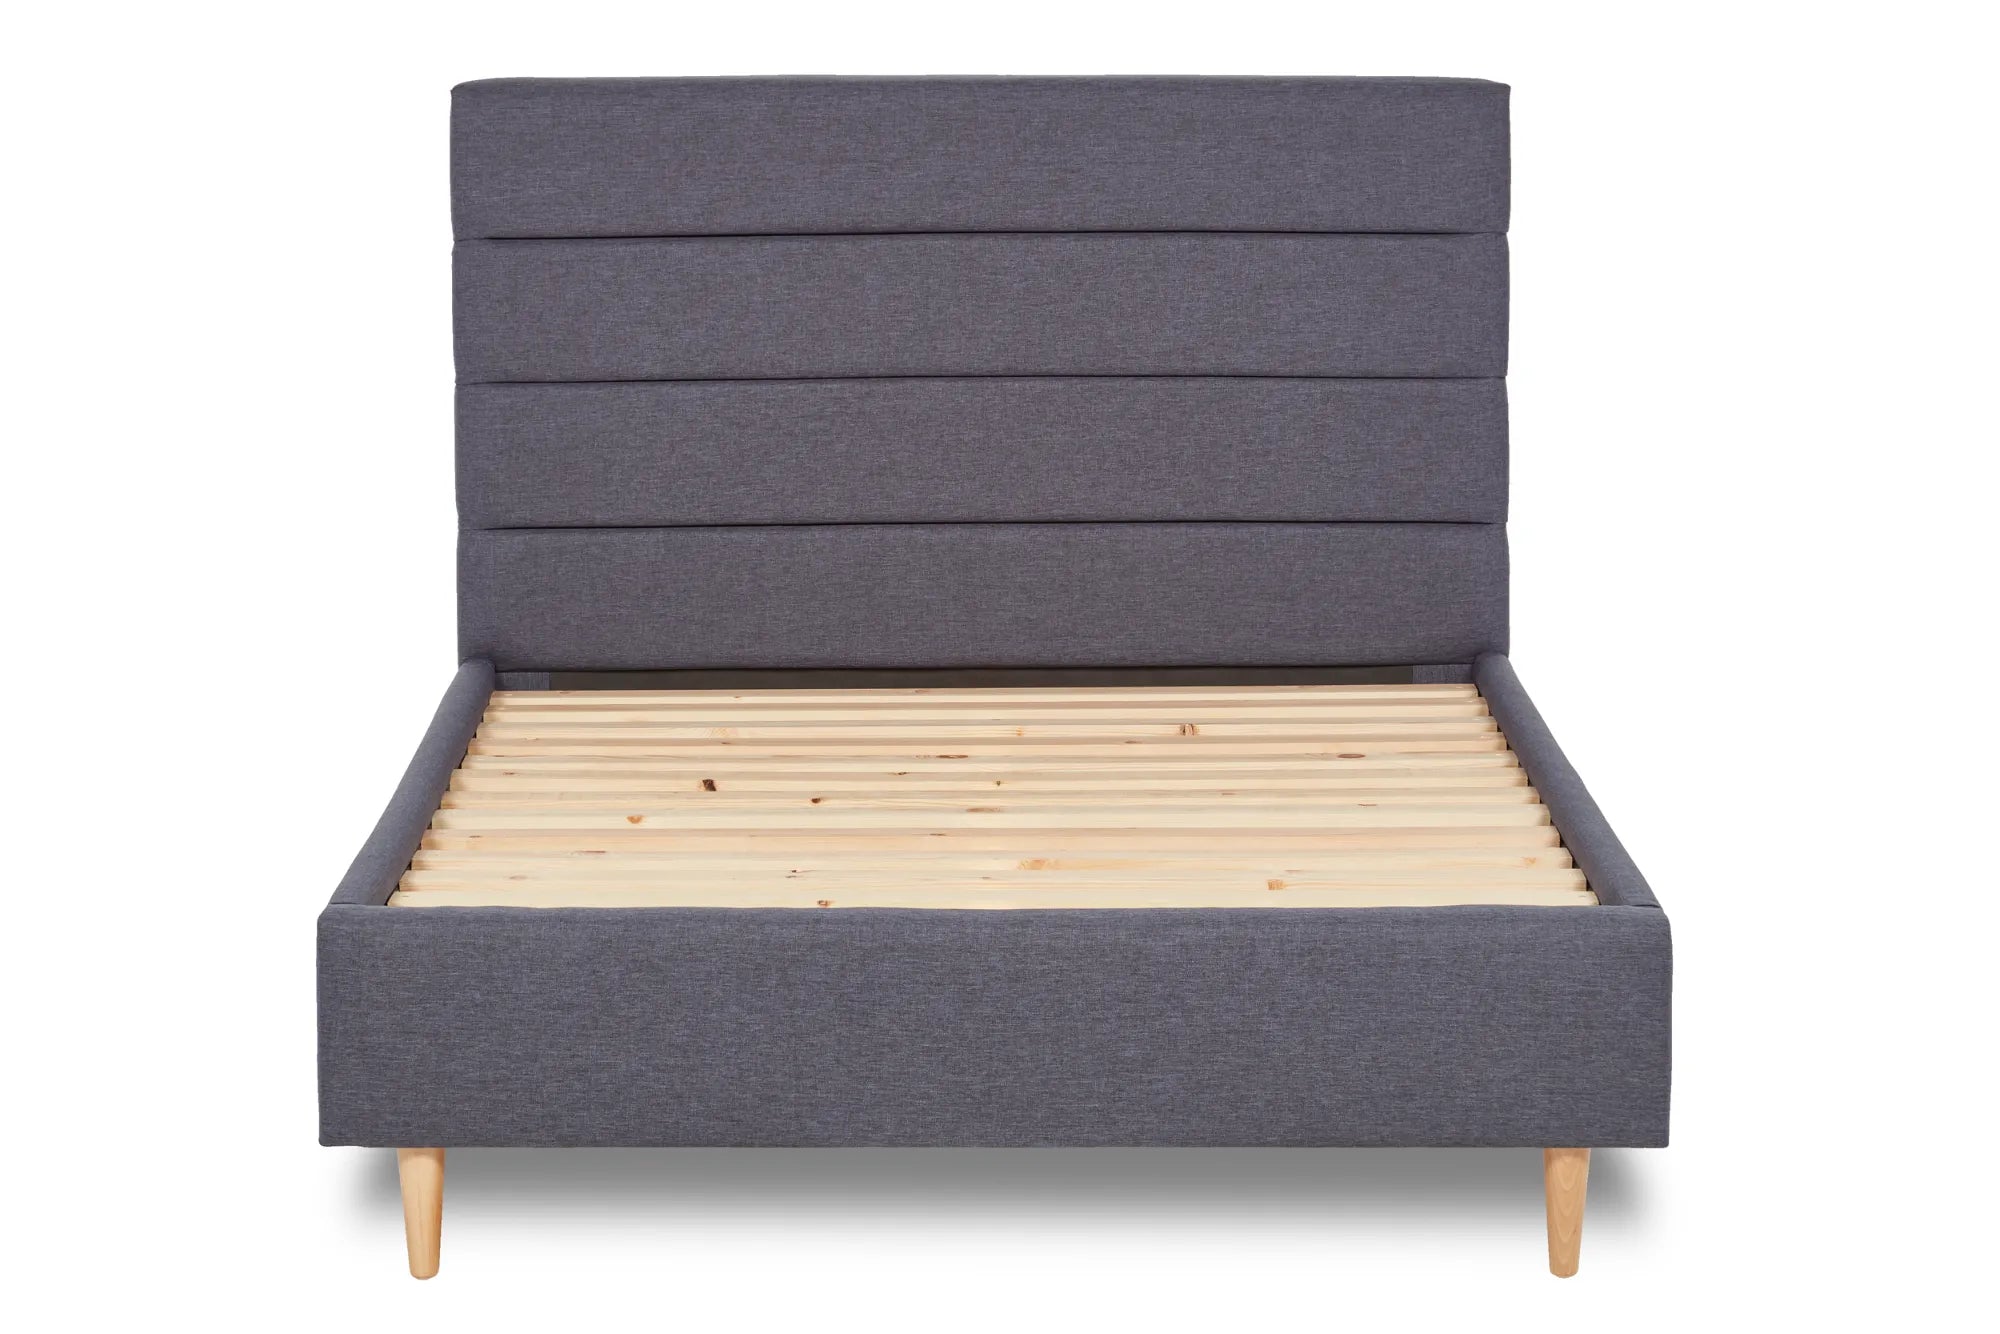 Viva Paneled Fabric Bed